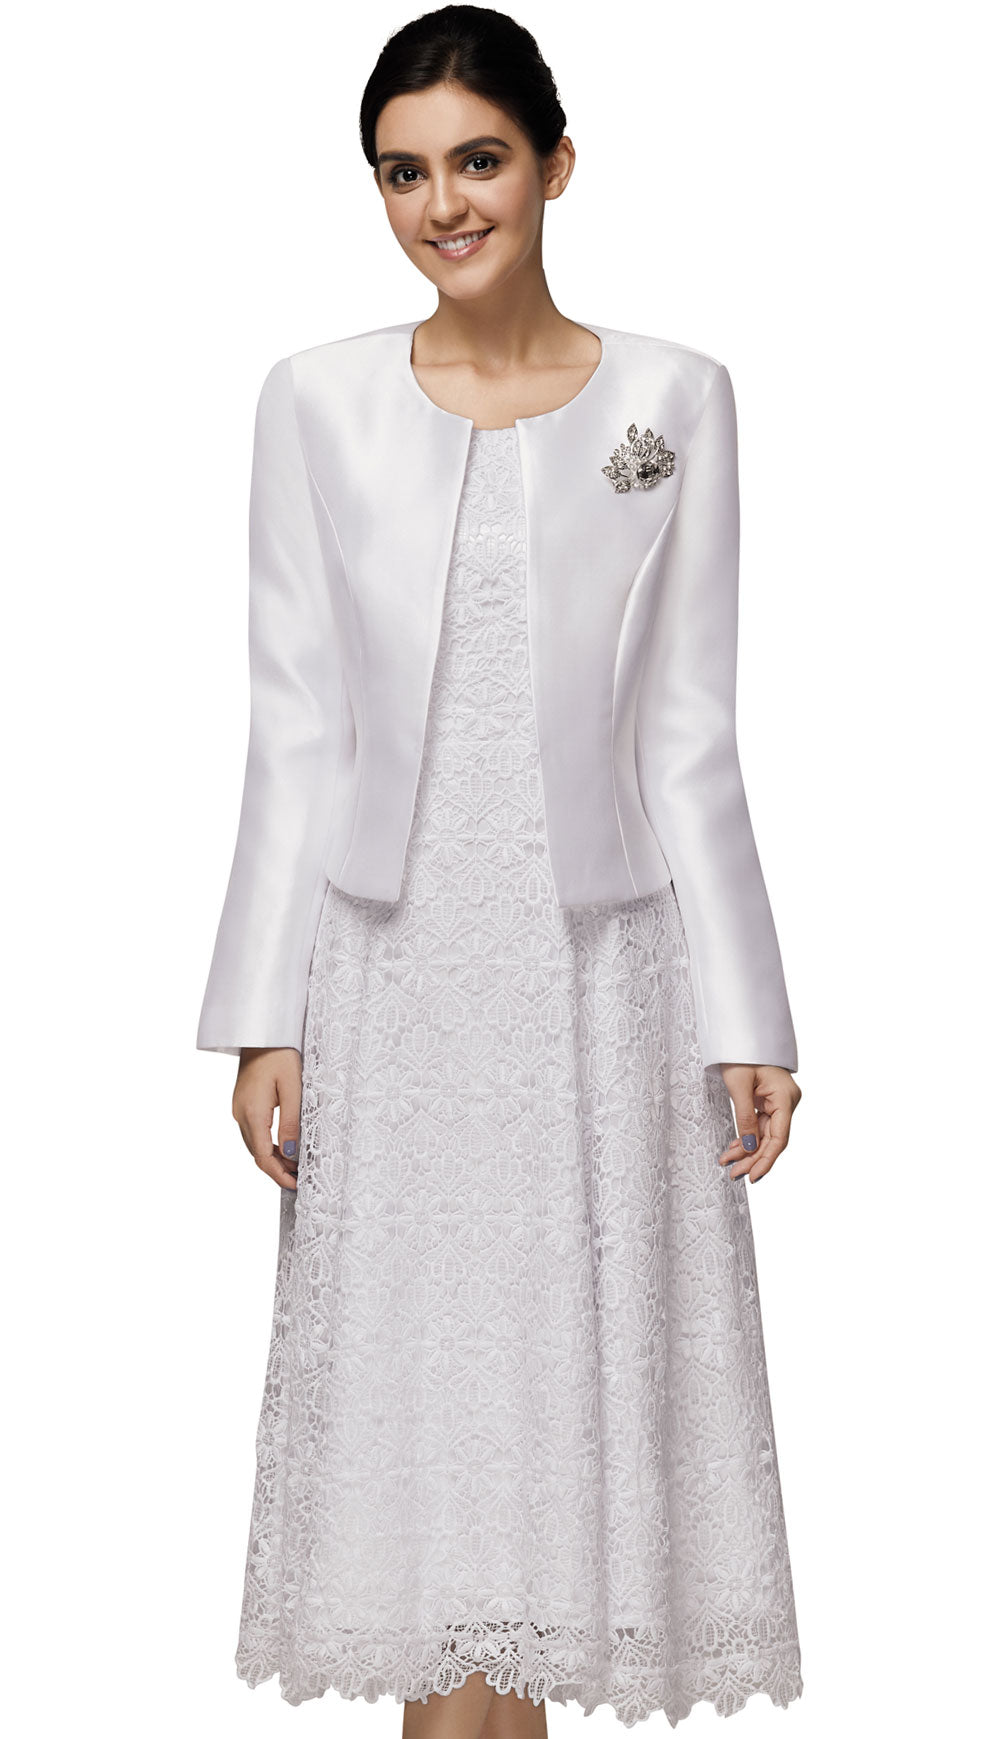 Nina Massini Church Dress 2883-White - Church Suits For Less